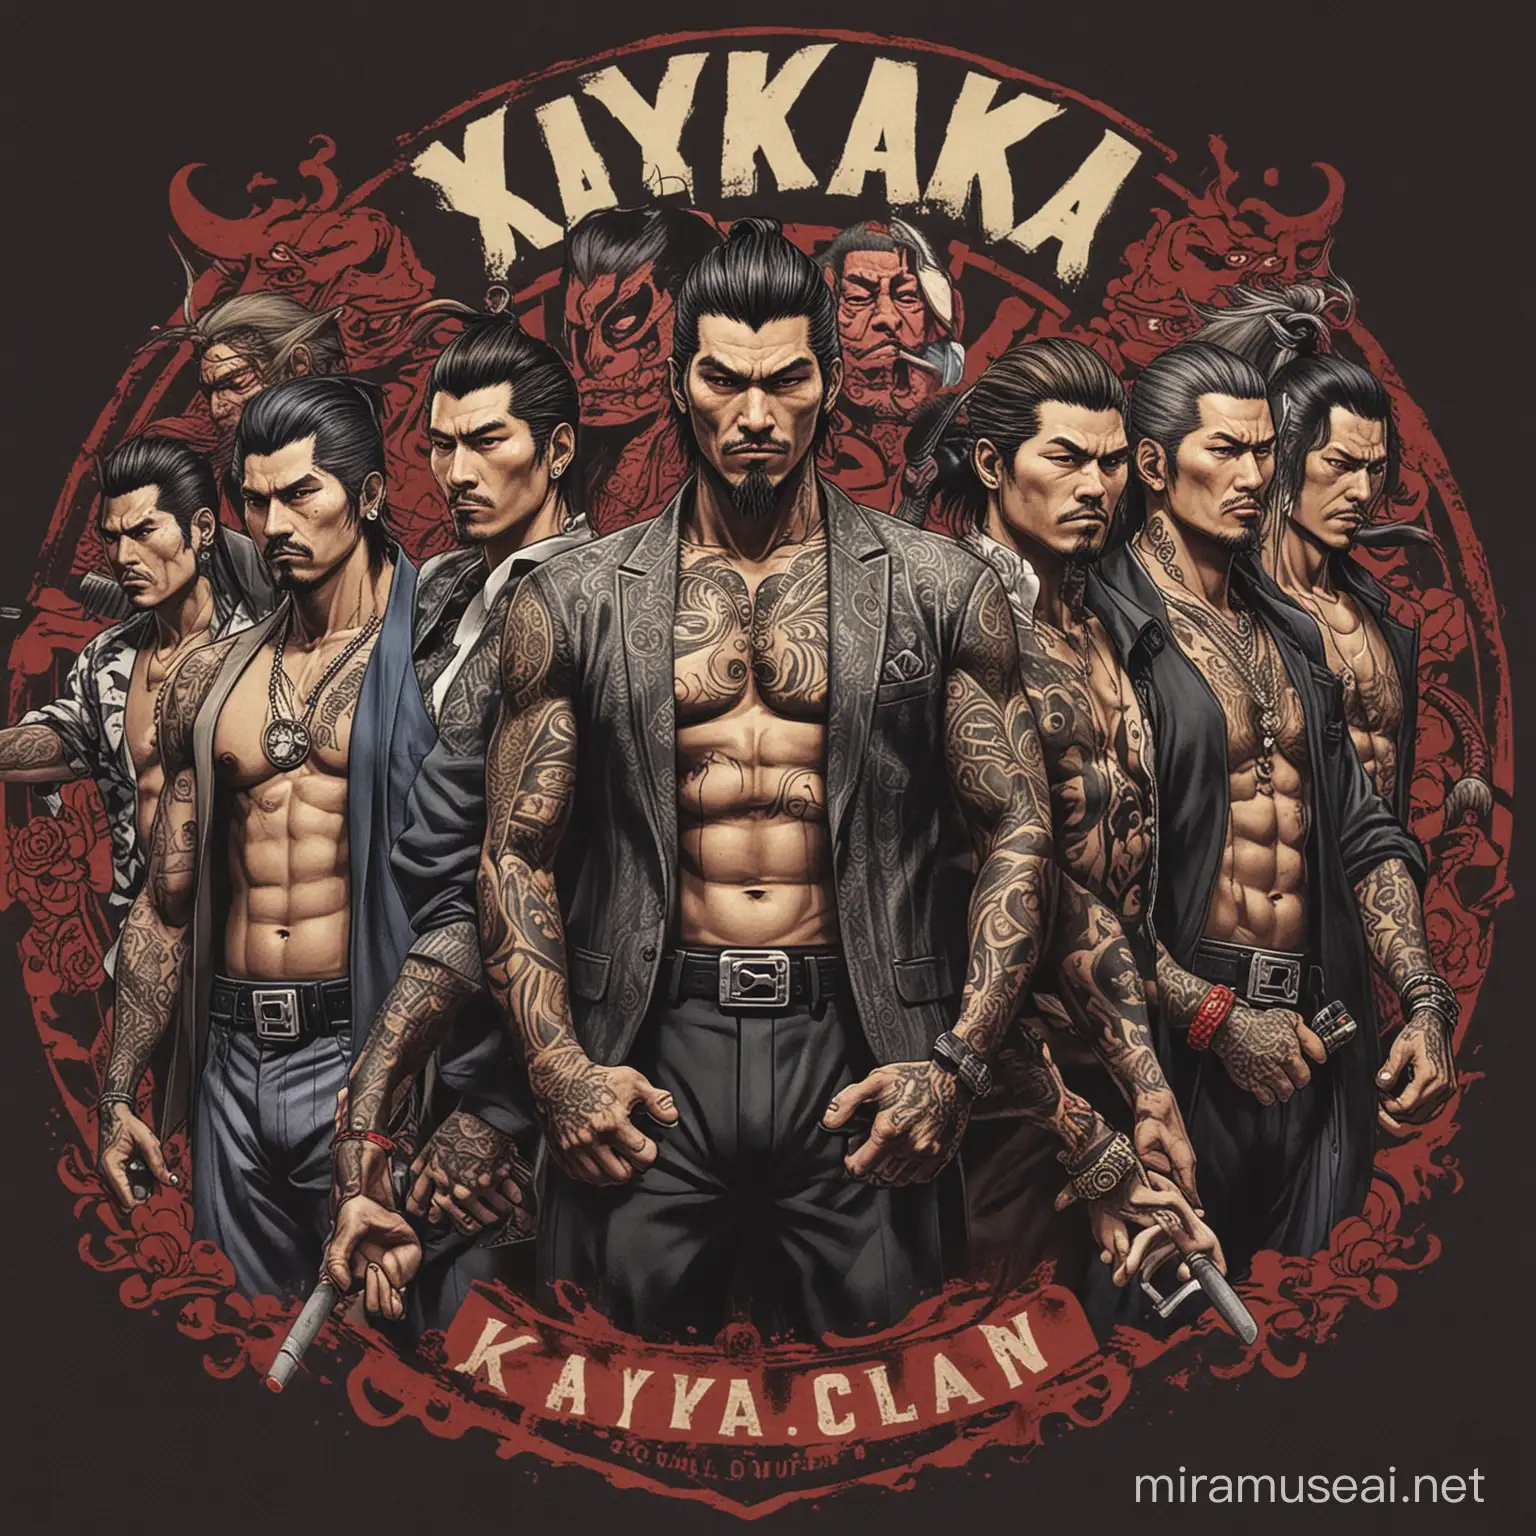 Powerful Yakuza Clan Leaders in Traditional Garb